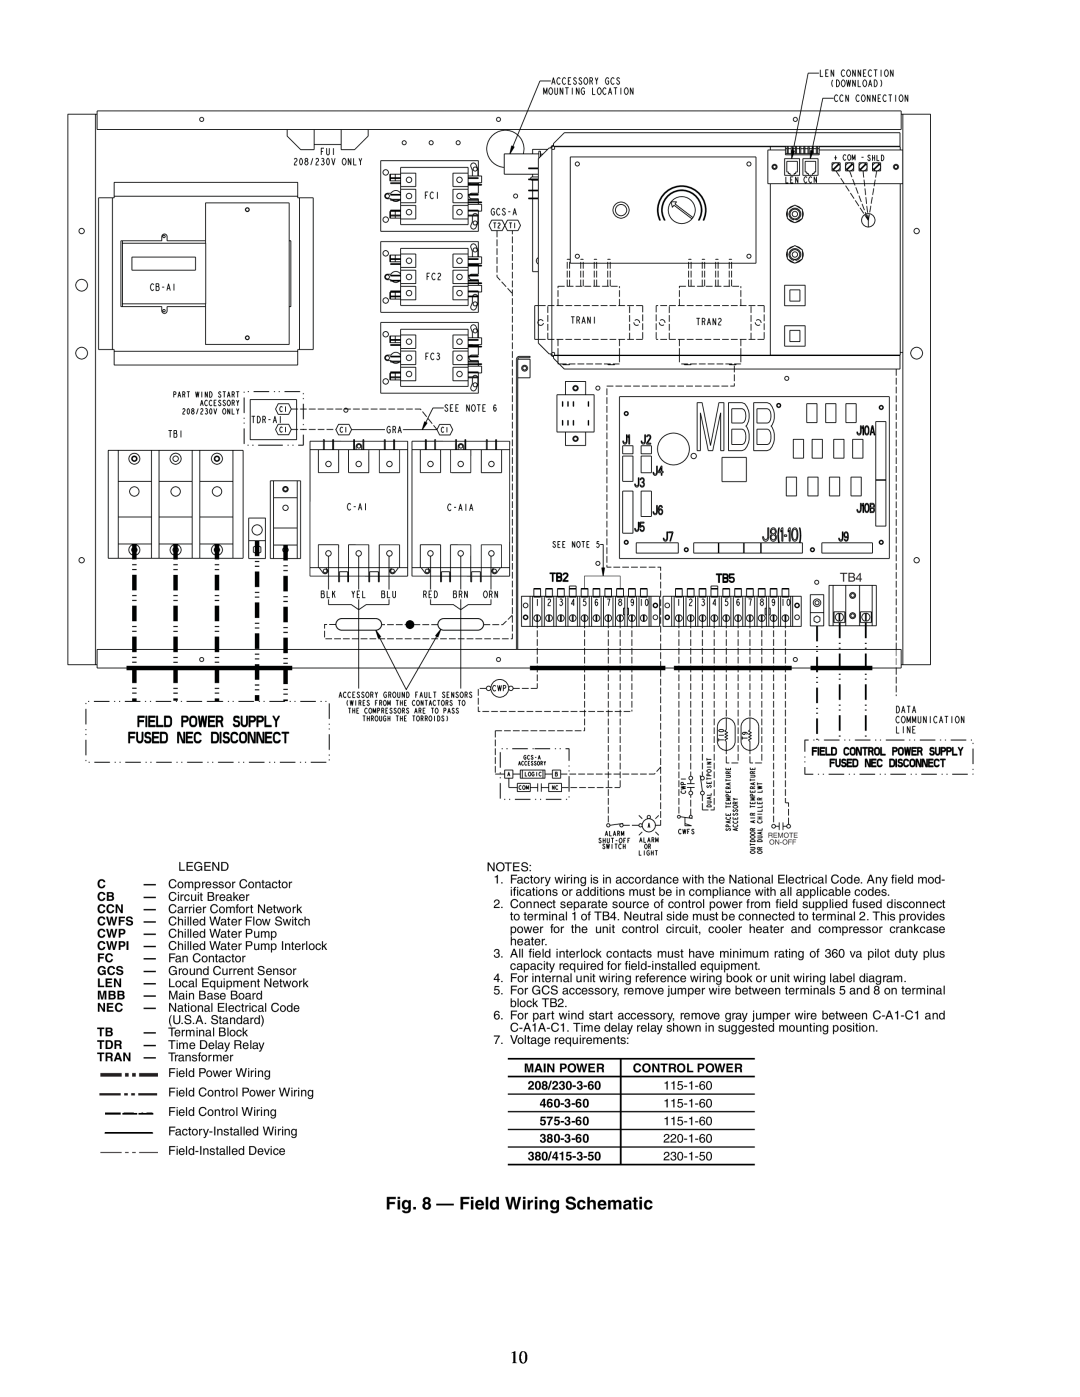 Carrier 30GTN015-035 installation instructions Field Wiring Schematic 